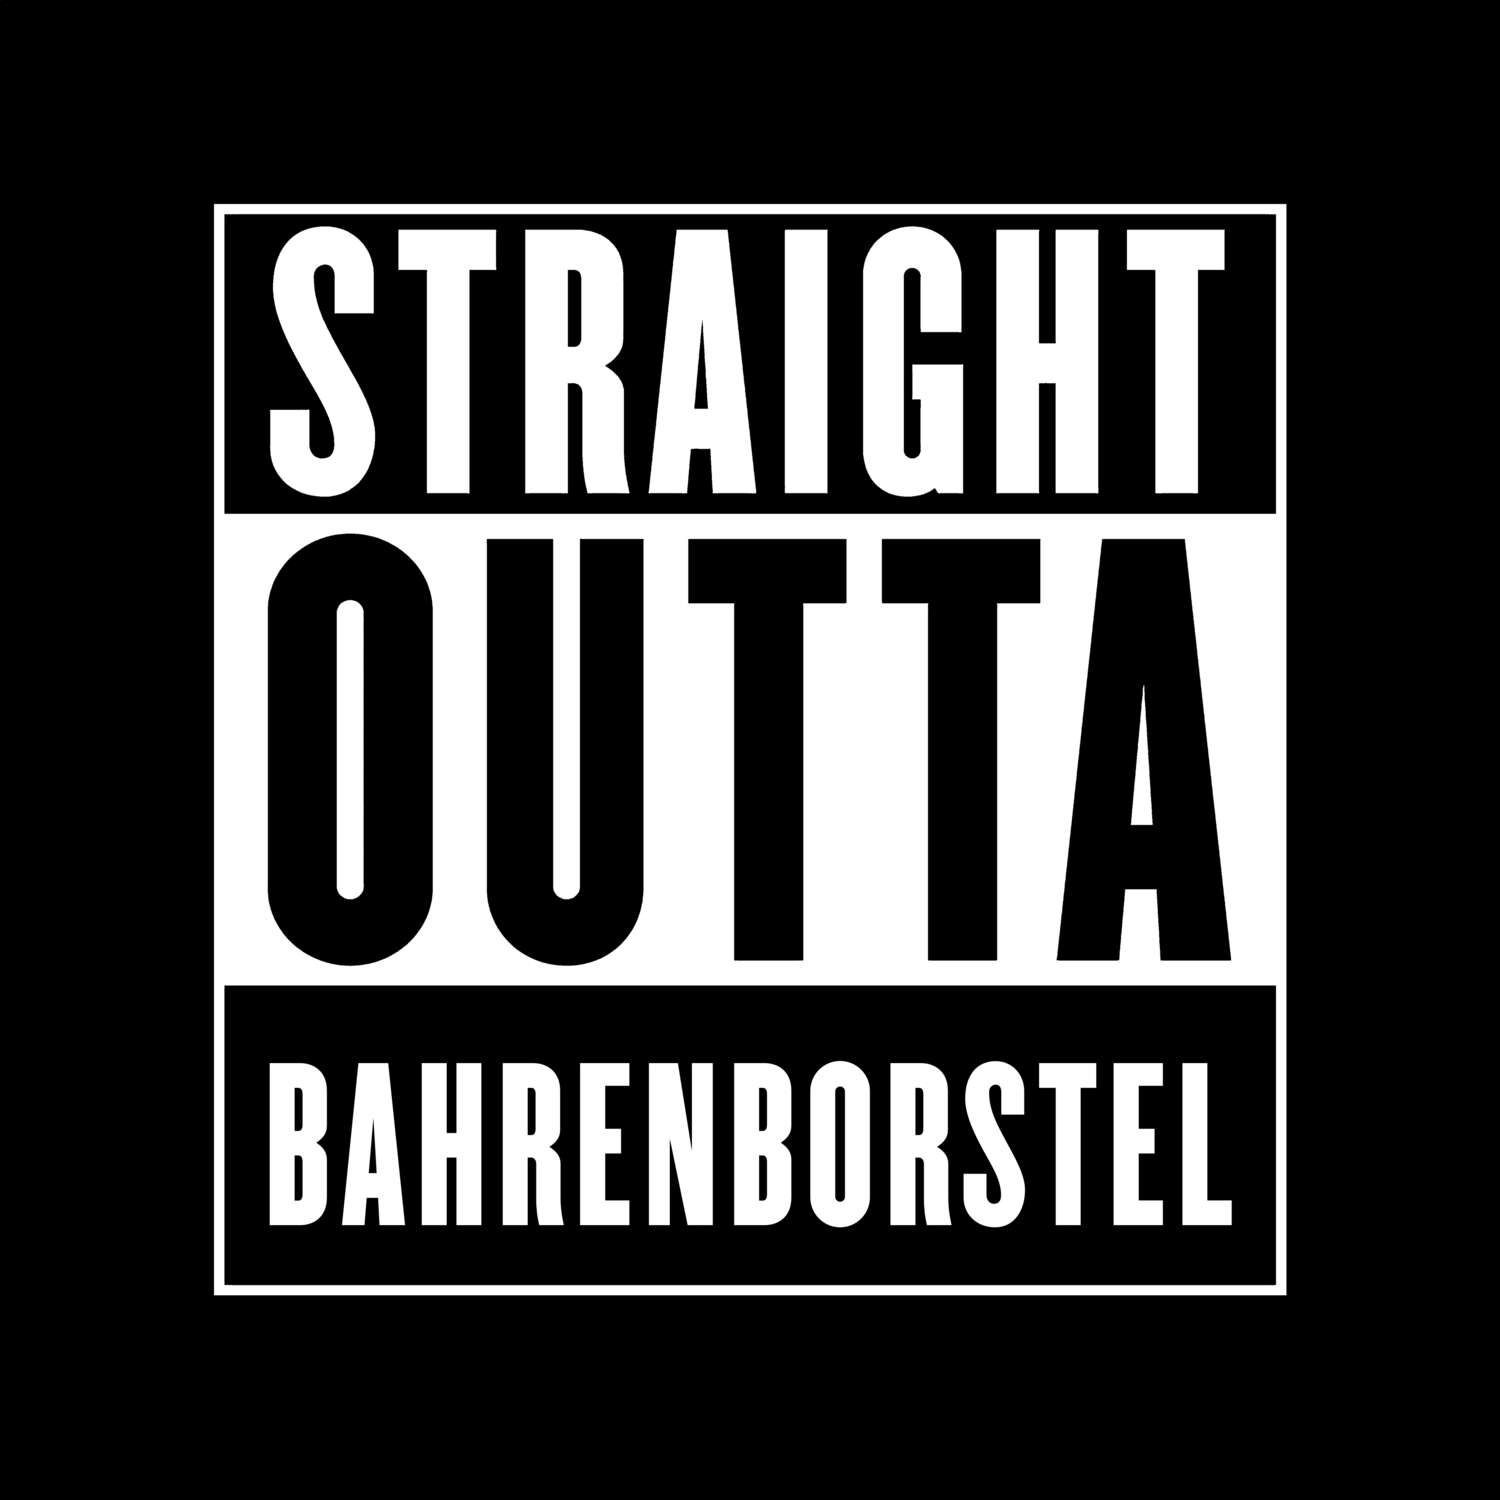 Bahrenborstel T-Shirt »Straight Outta«